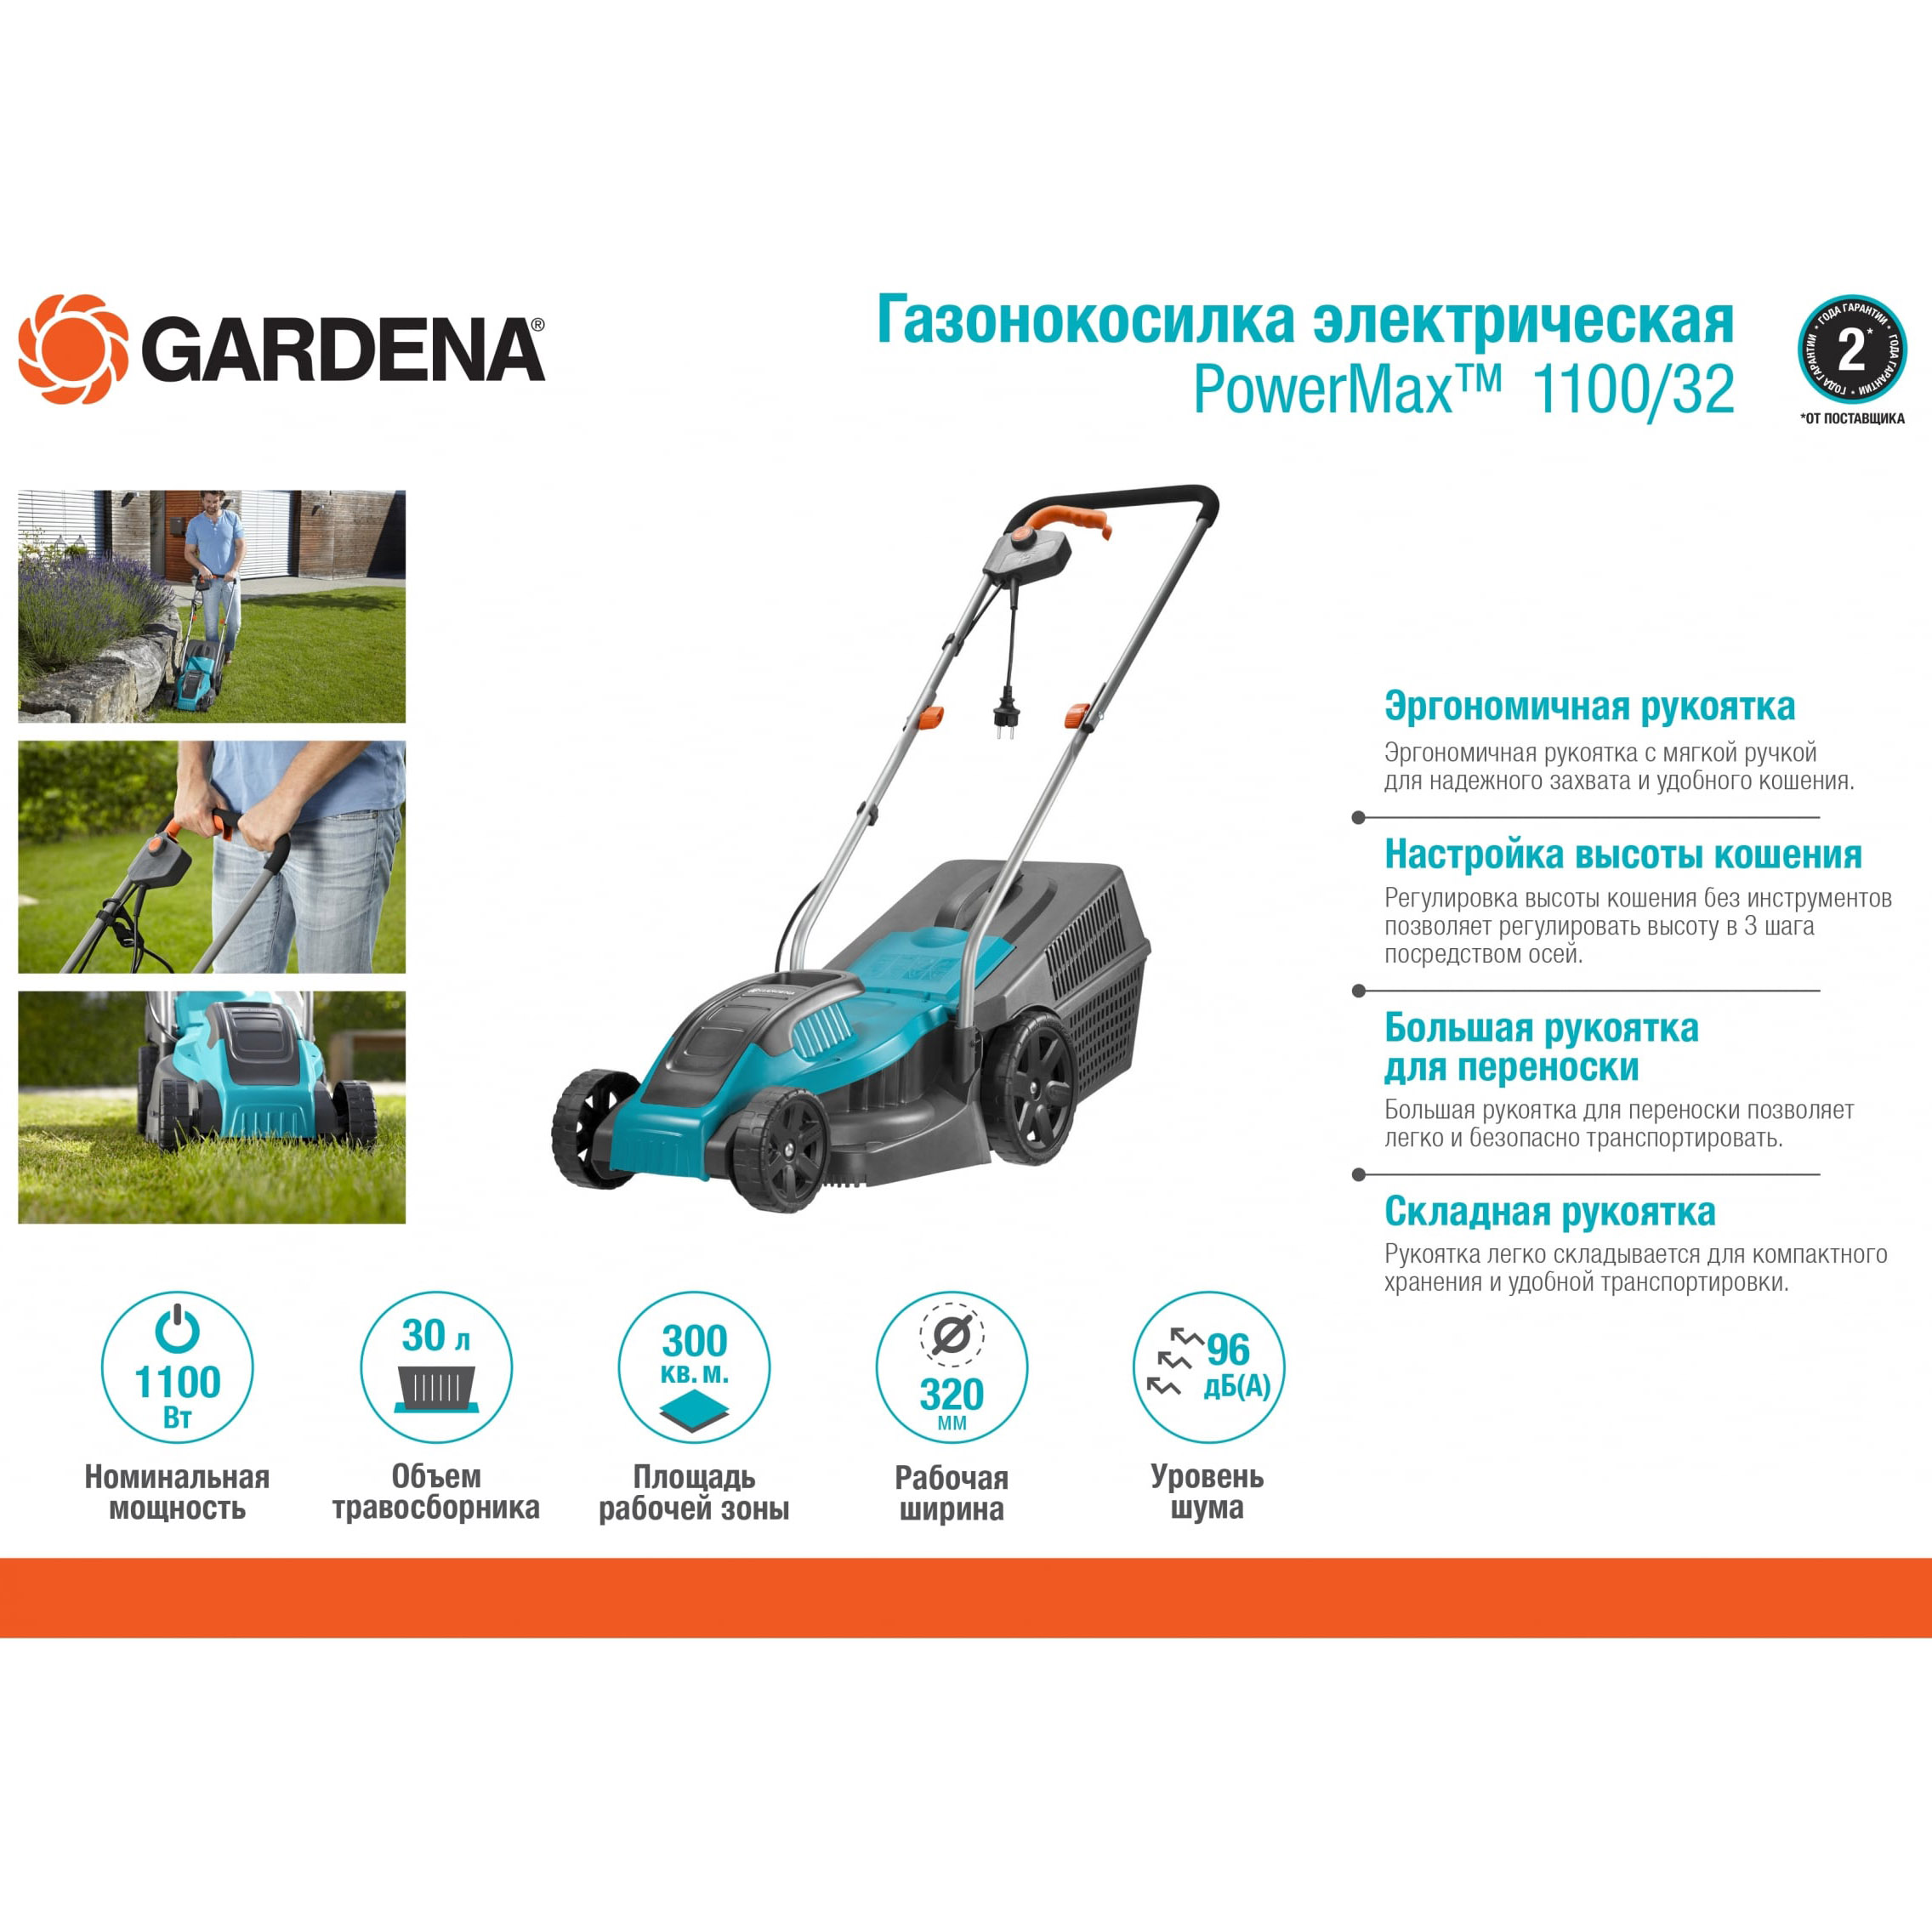 Газонокосилка электрическая Gardena powermax 1100/32 - фото 2